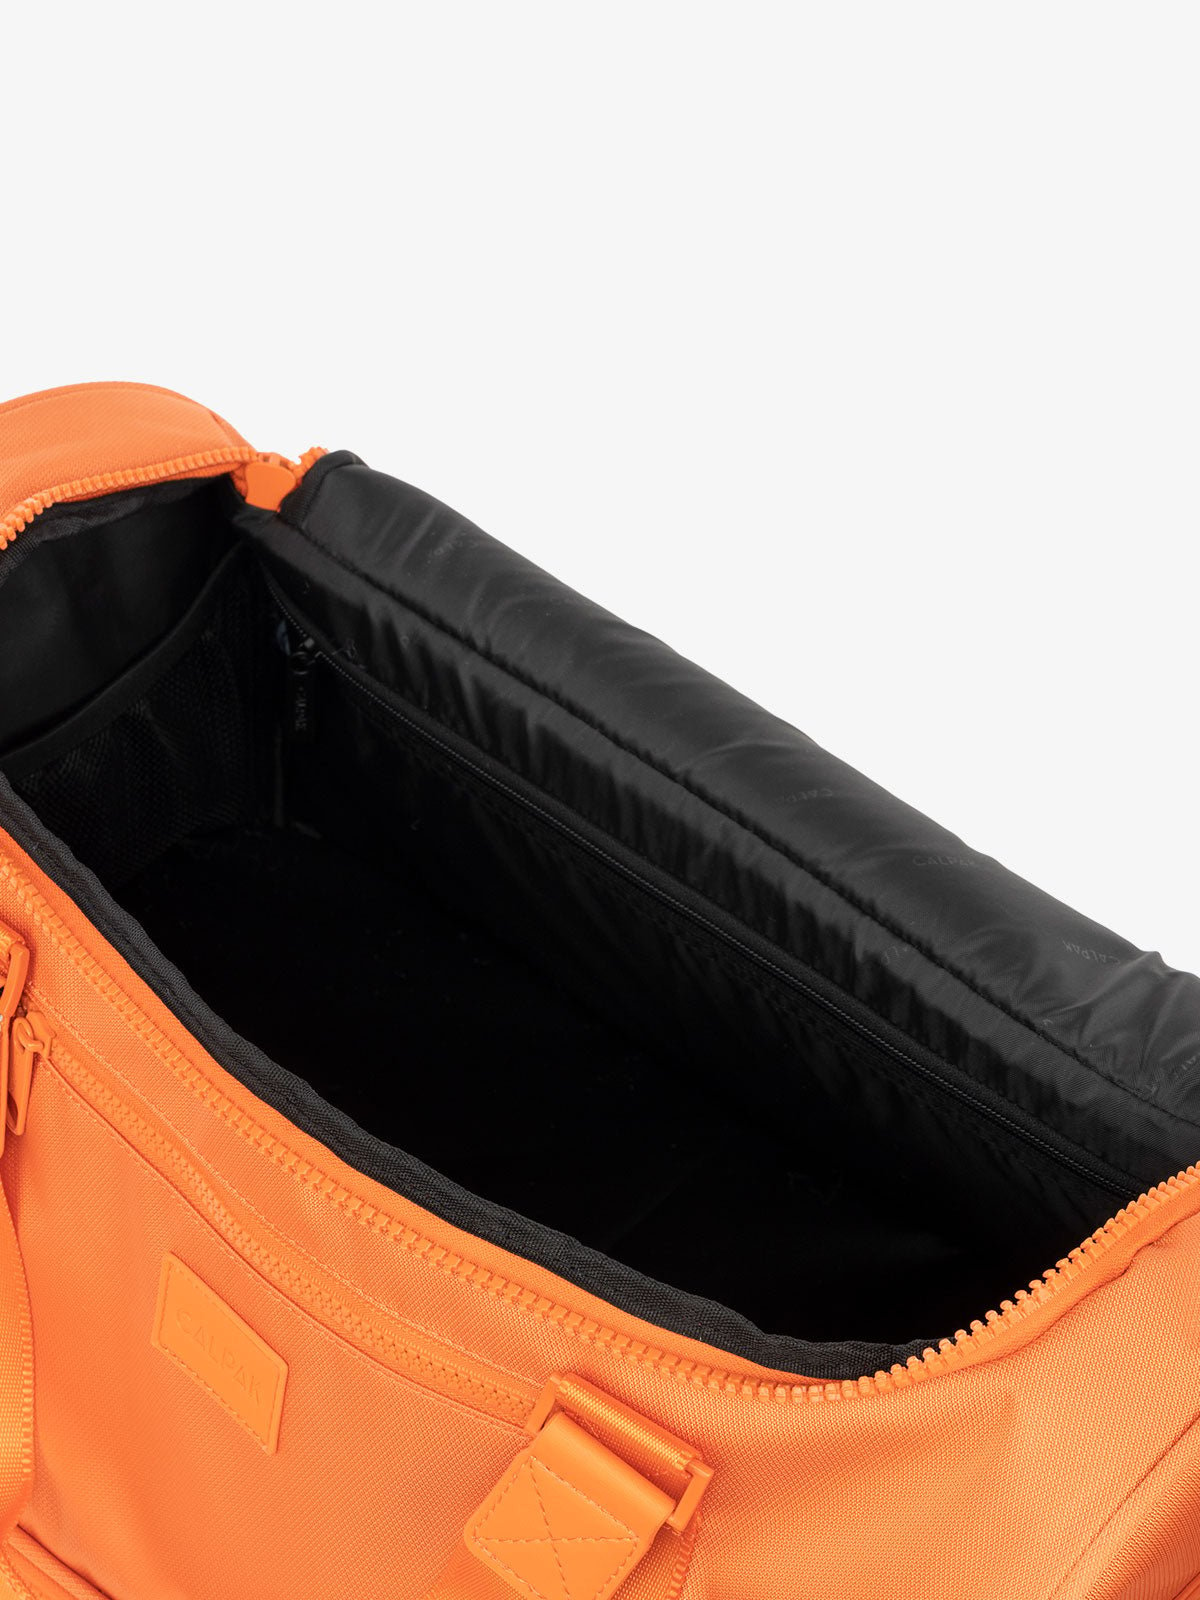 CALPAK Stevyn Duffel with multiple interior pockets in orange